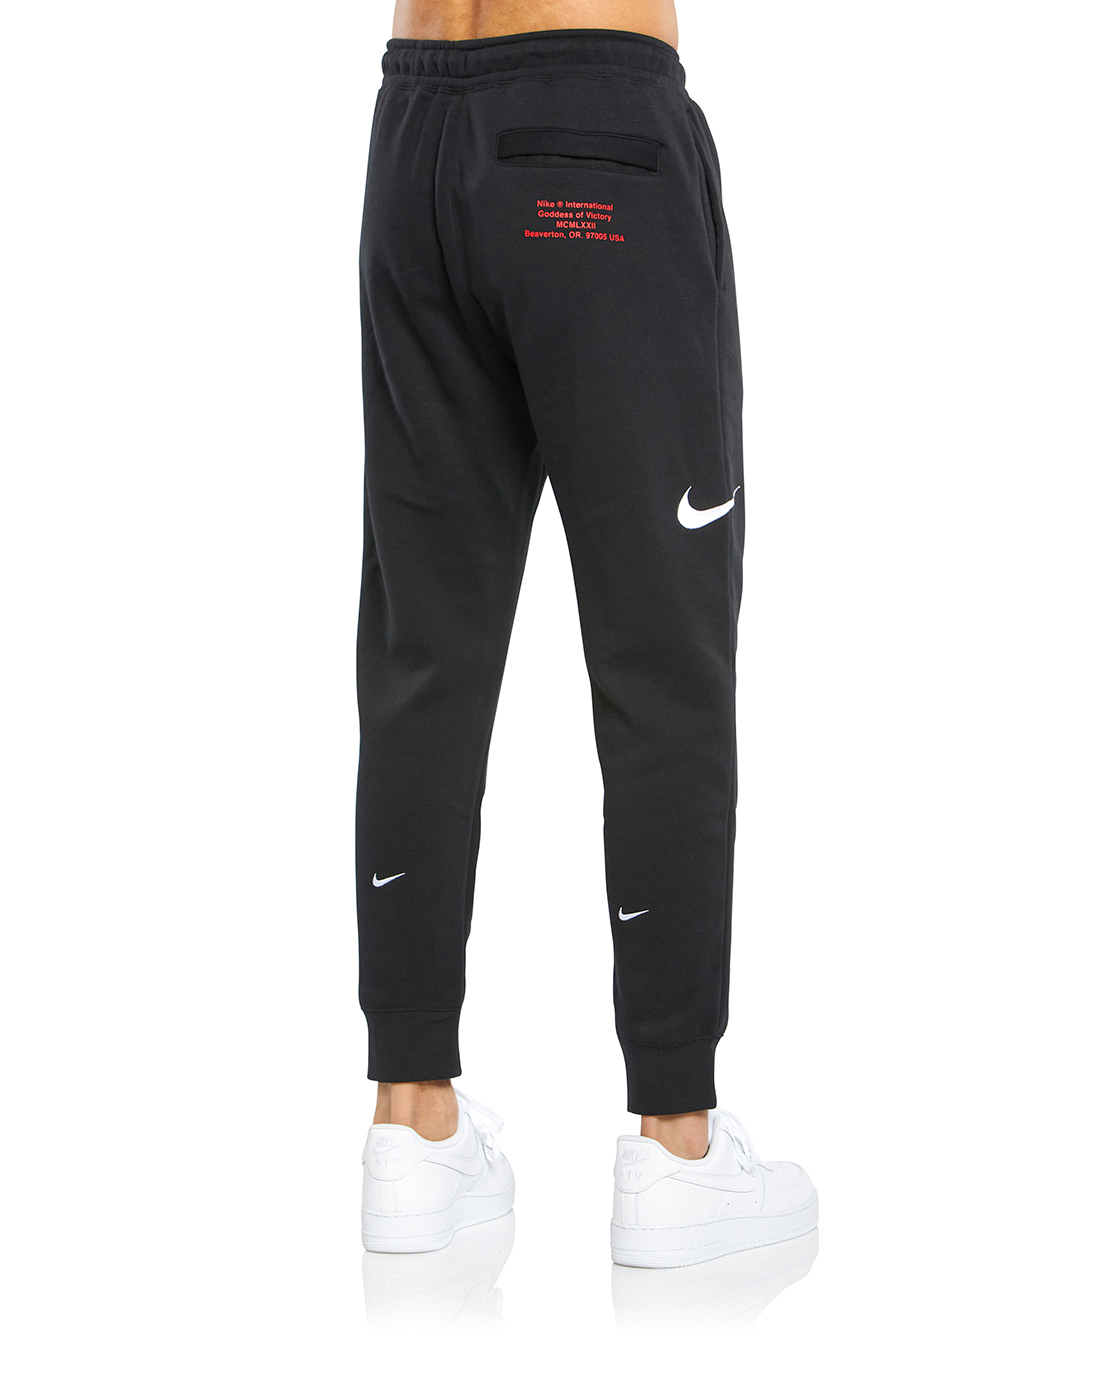 Nike Mens Swoosh Pants | Life Style Sports